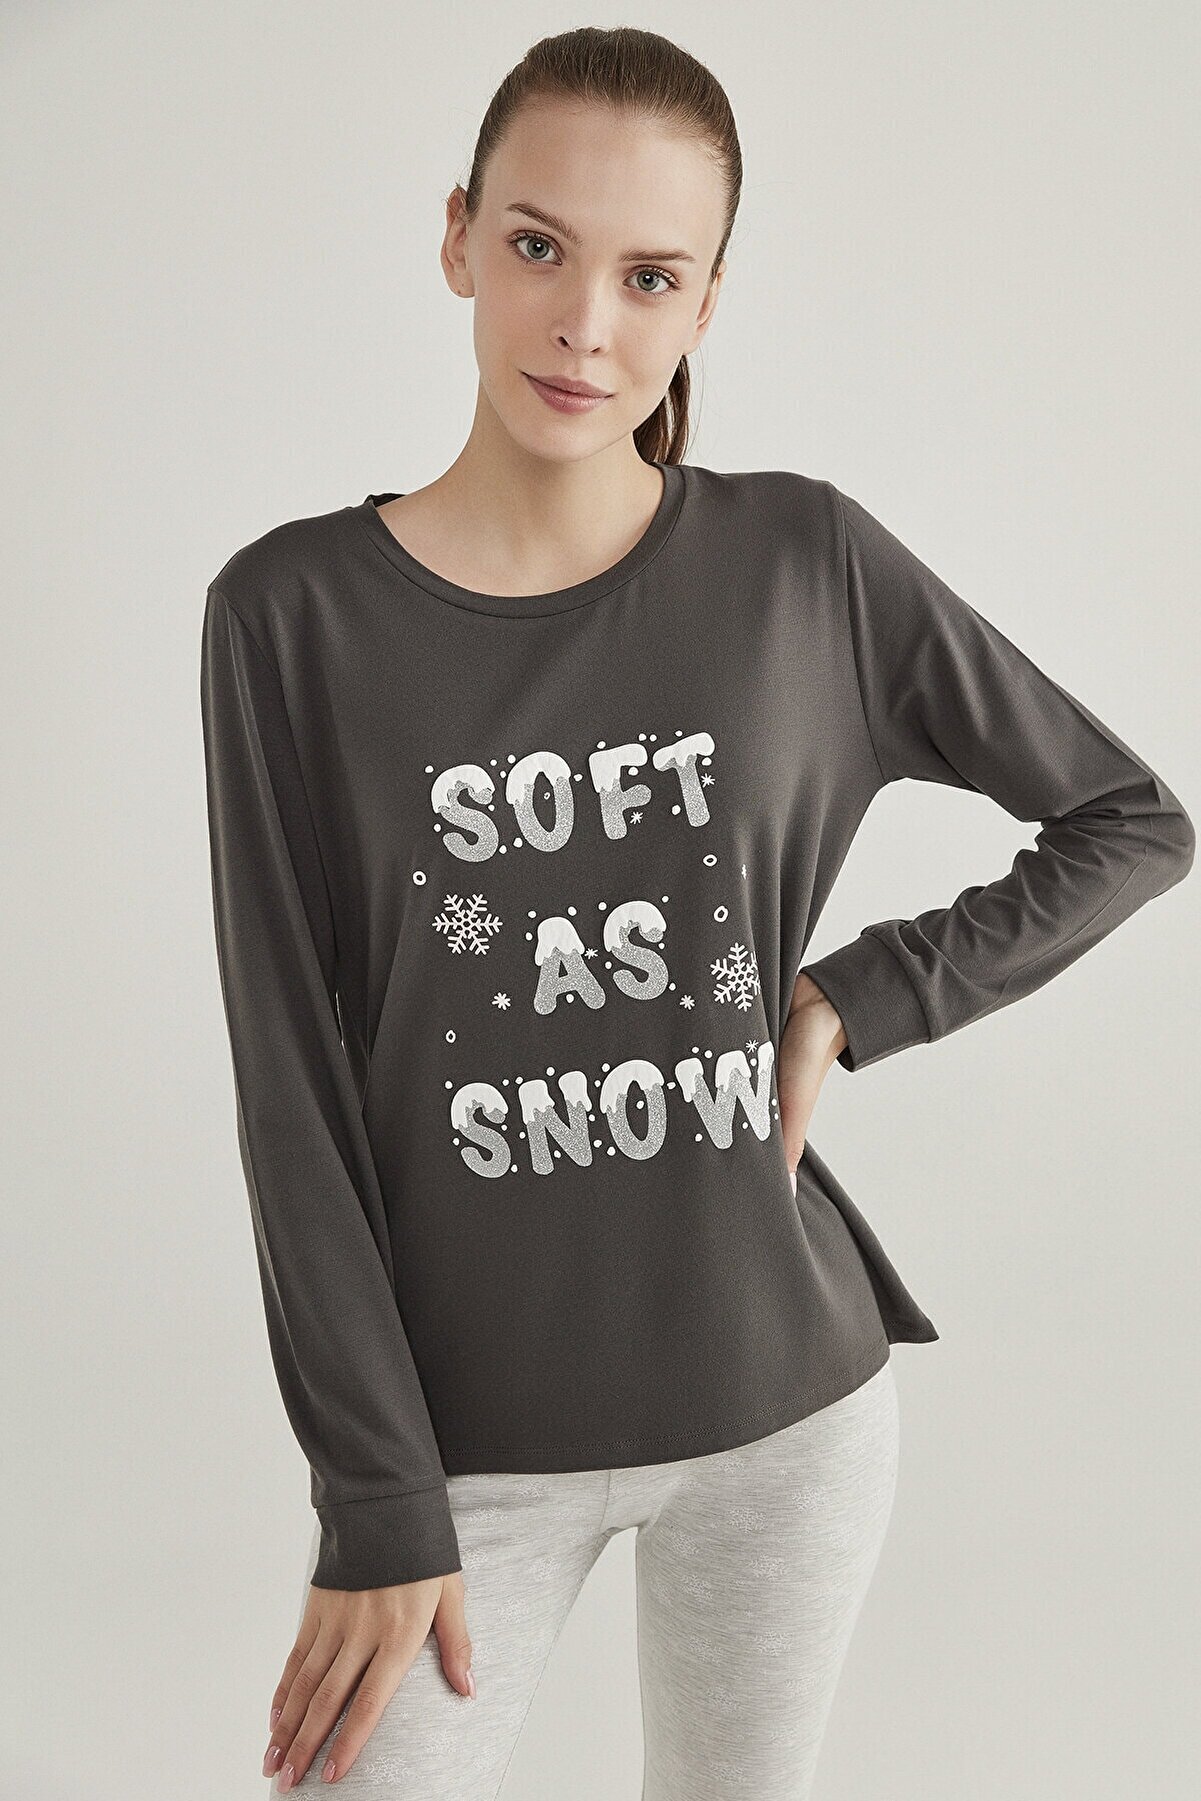 Penti Hot Tech Soft Snow Sweatshirt